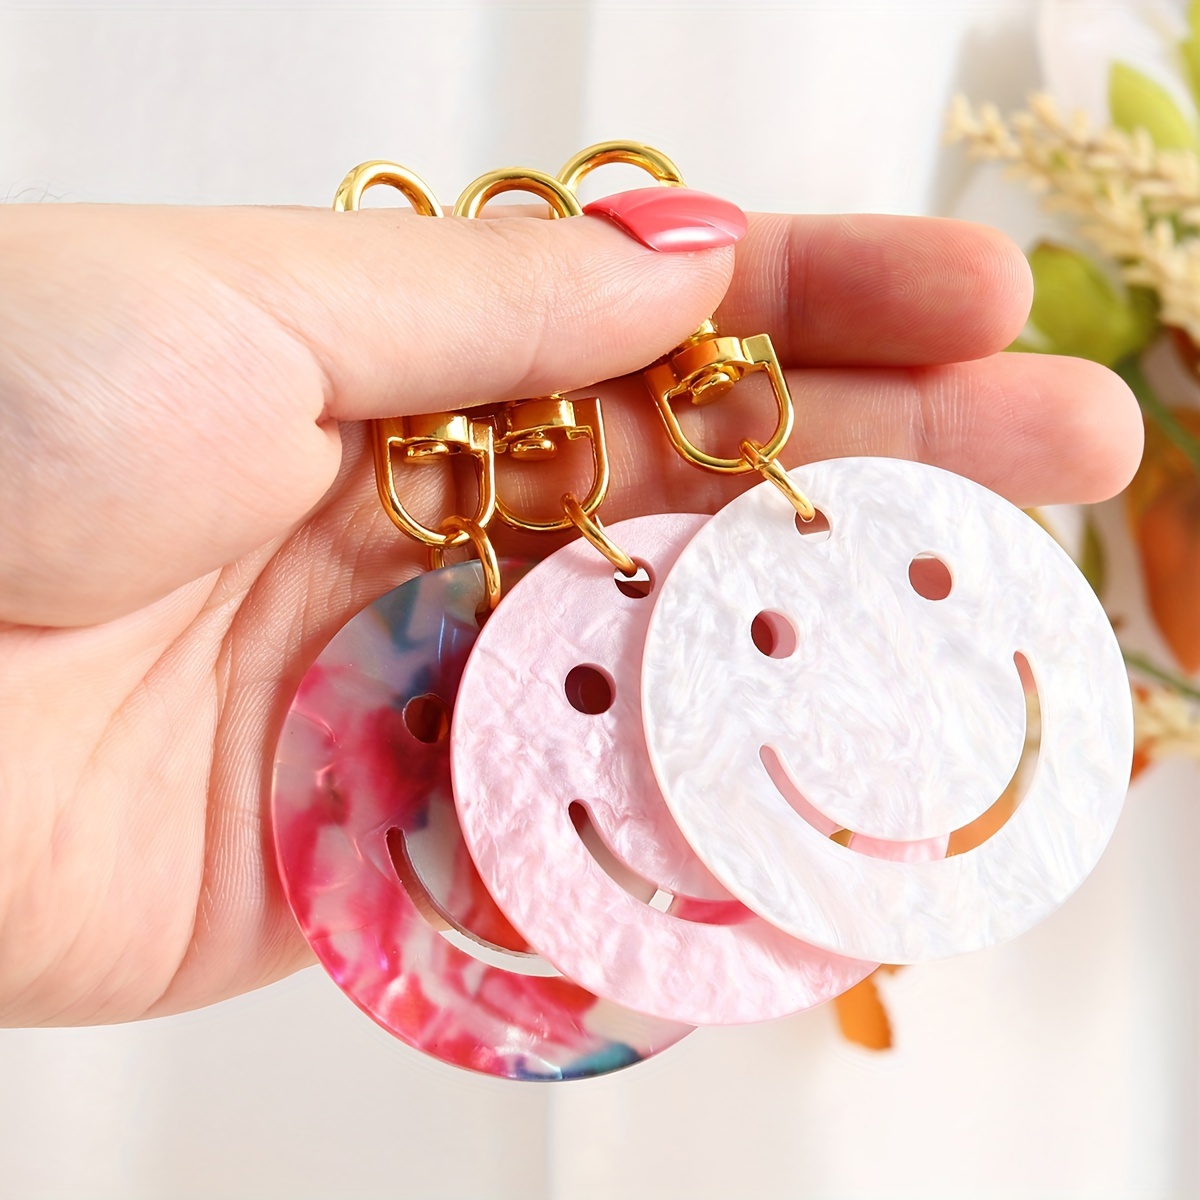 Handmade Heart Keychain Acrylic Plastic Link Chain Key Ring for Women Girls Handbag Pendant Accessorie Car Keys Artificial Jewelry Gifts,Temu